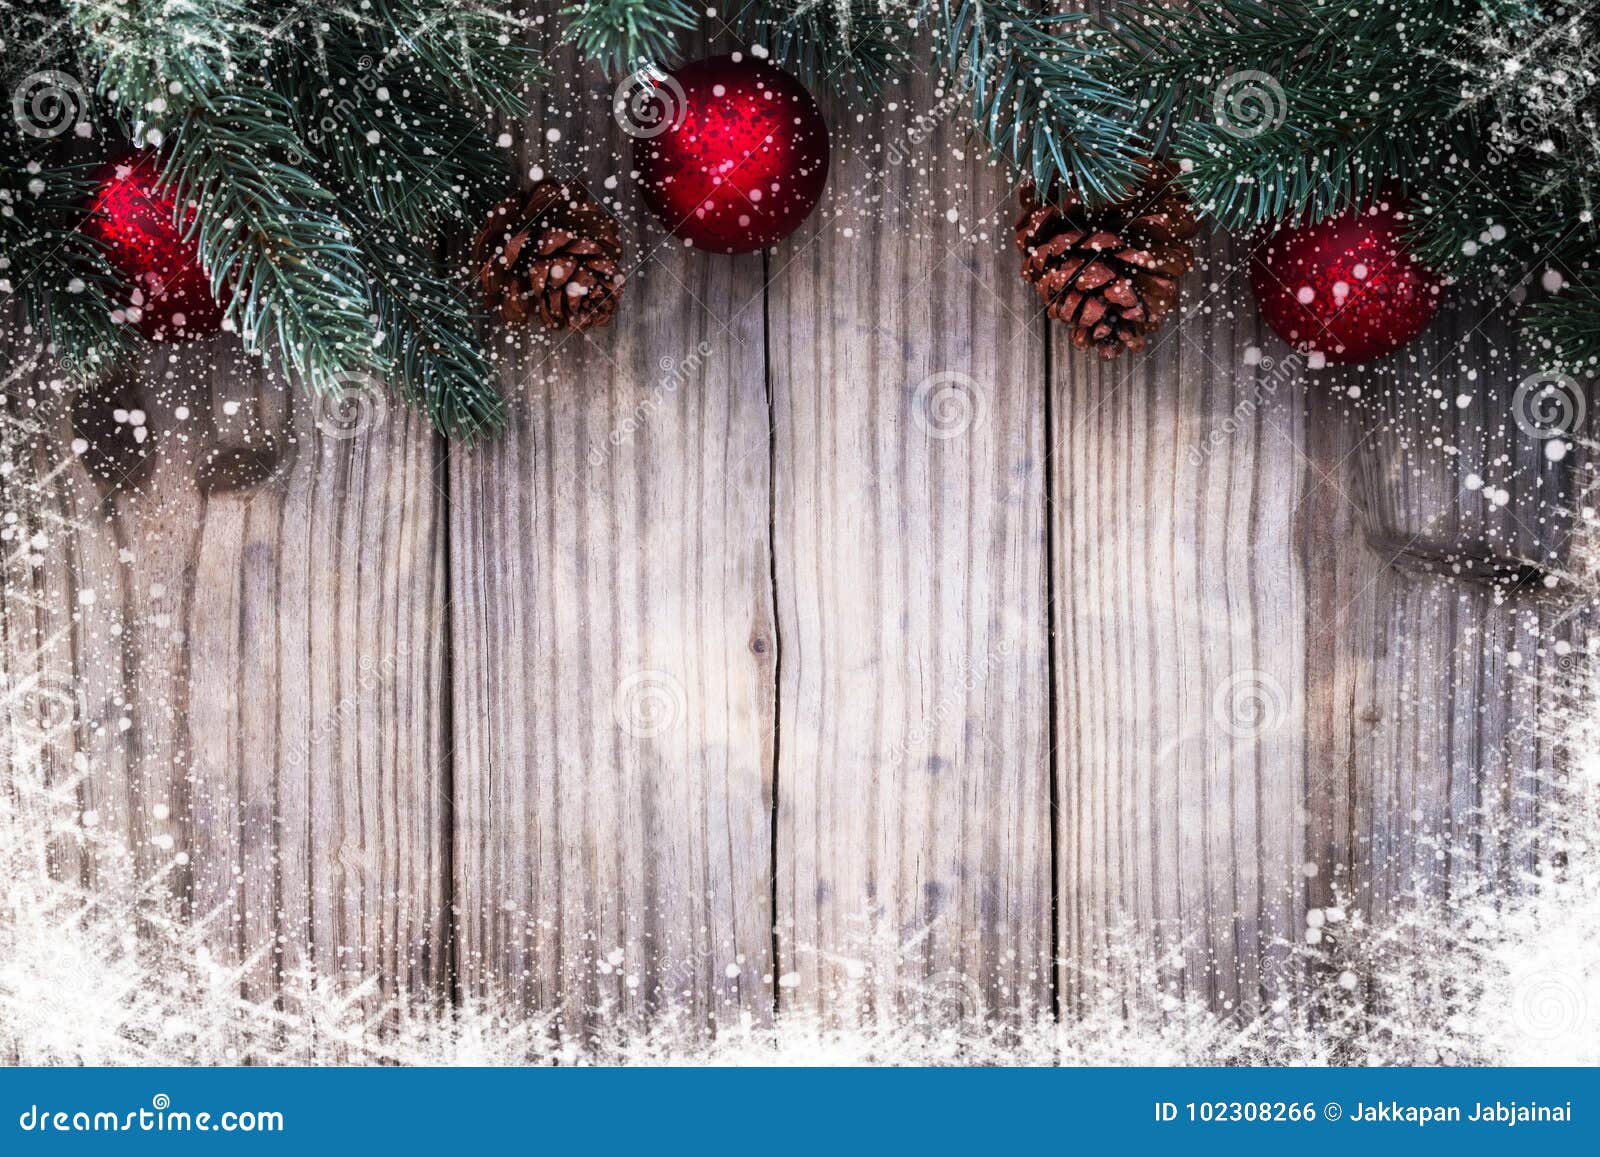 Christmas background stock photo. Image of design, ball - 102308266